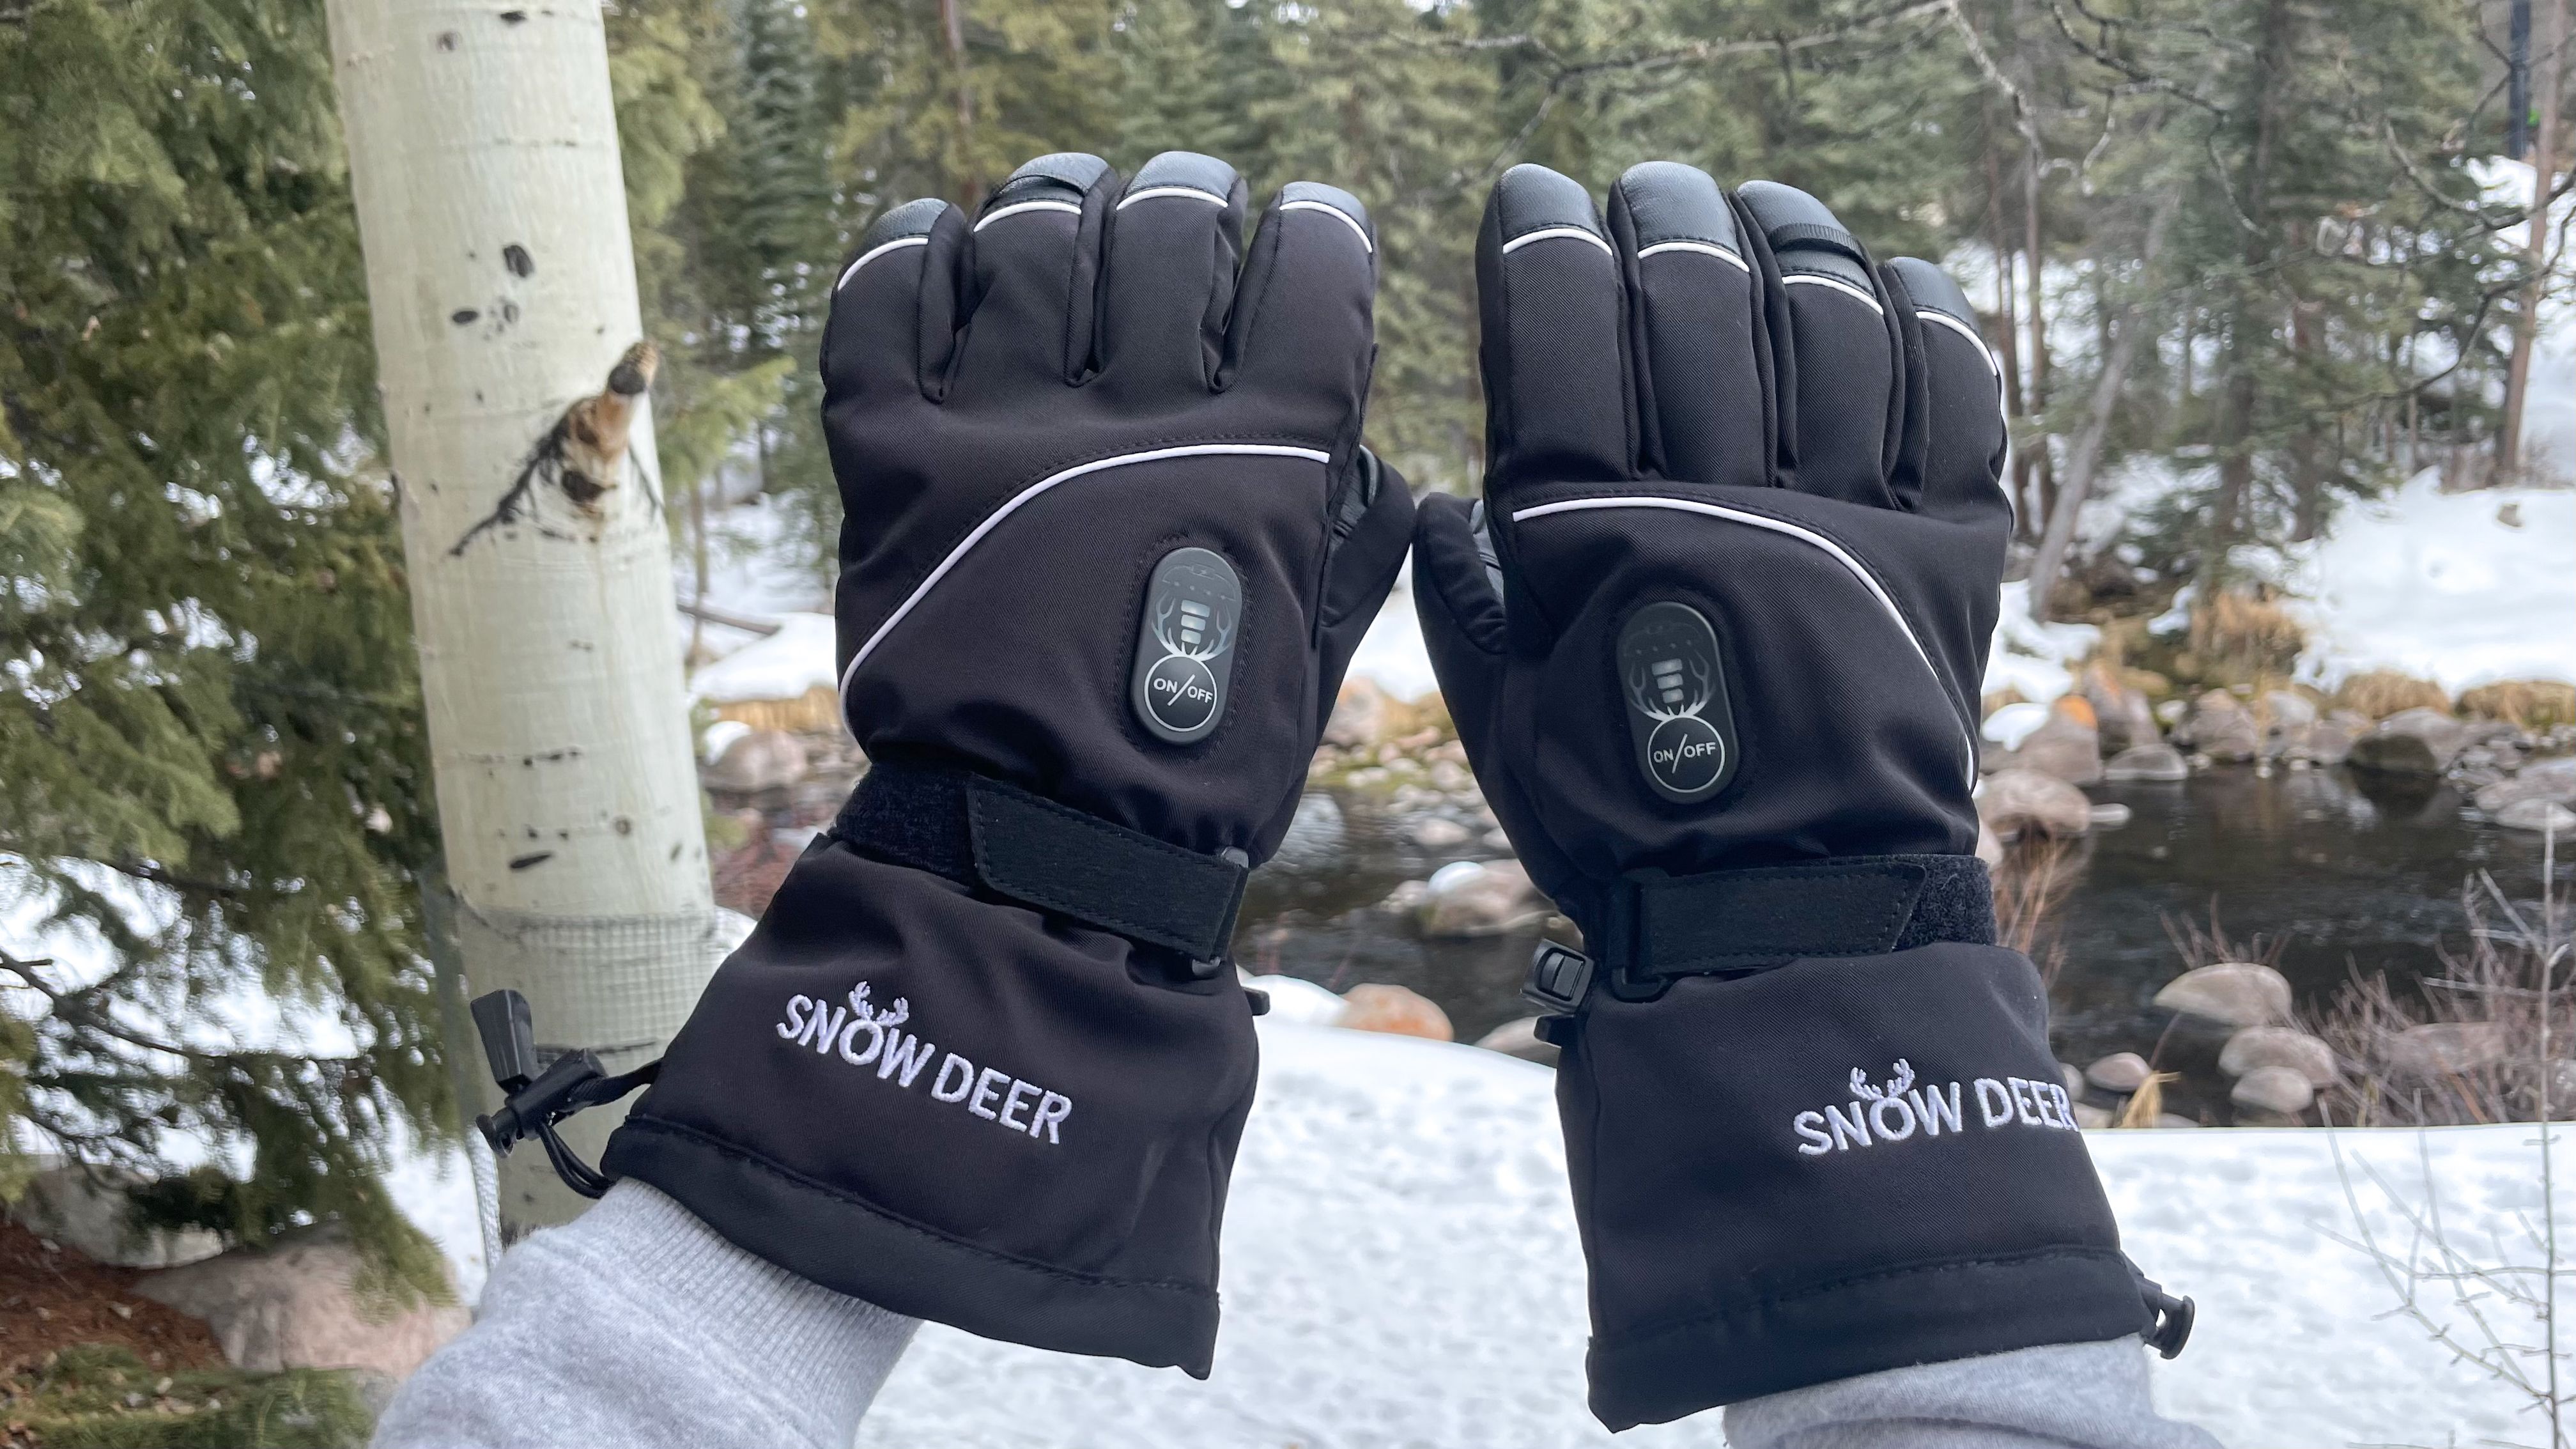 https://media.cnn.com/api/v1/images/stellar/prod/snow-deer-upgraded-heated-gloves-11-cnnu.jpg?c=original